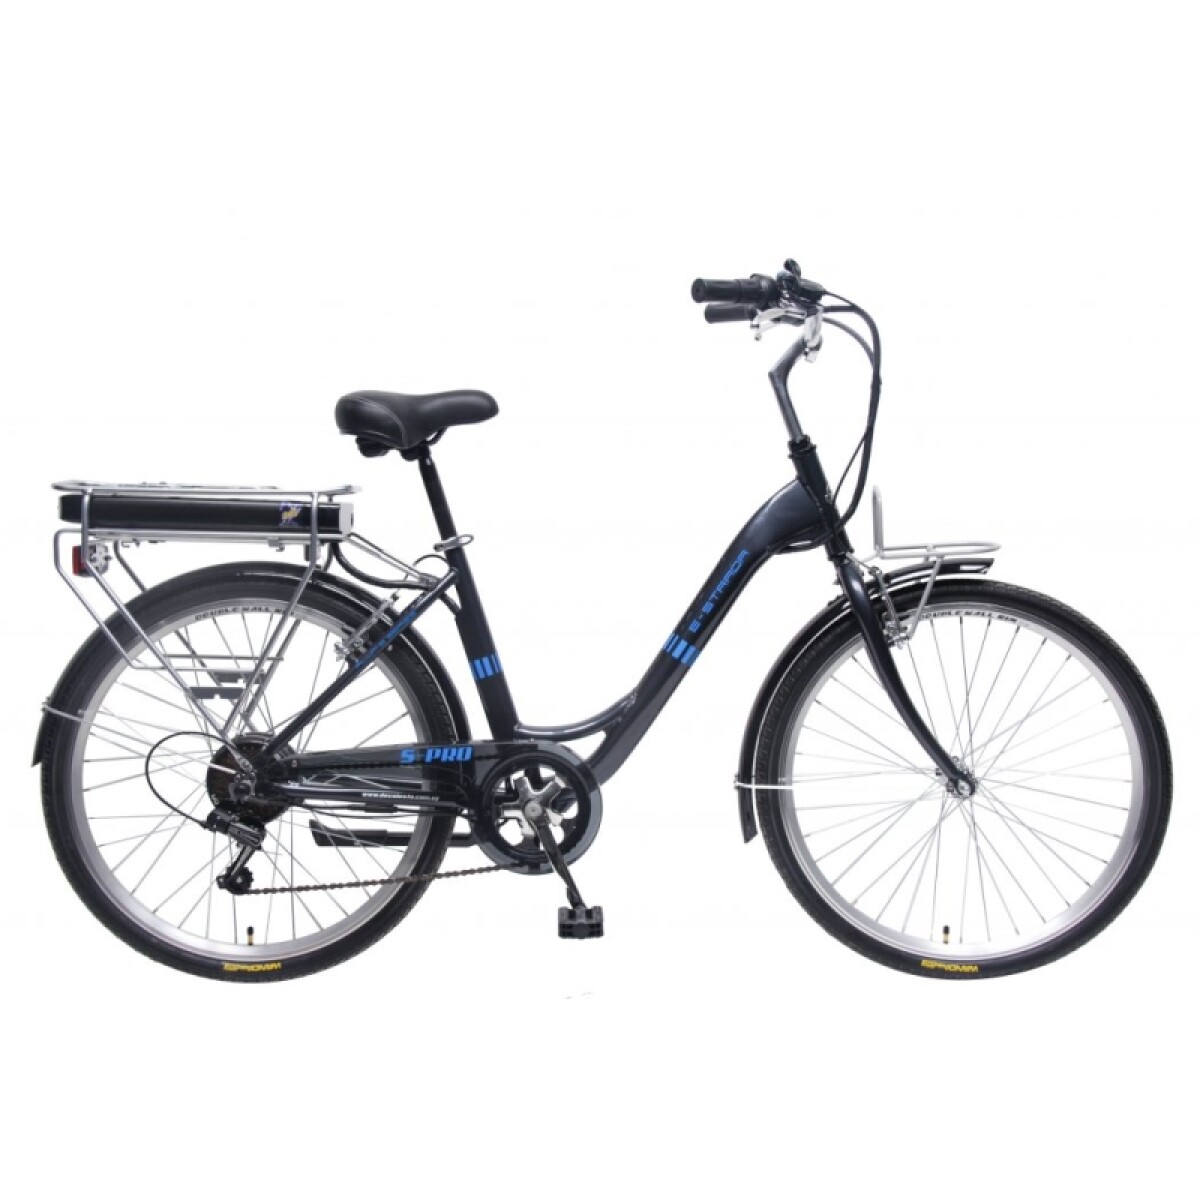 Bicicleta Electrica S-pro E-strada Aluminio Bateria Litio - Gris 